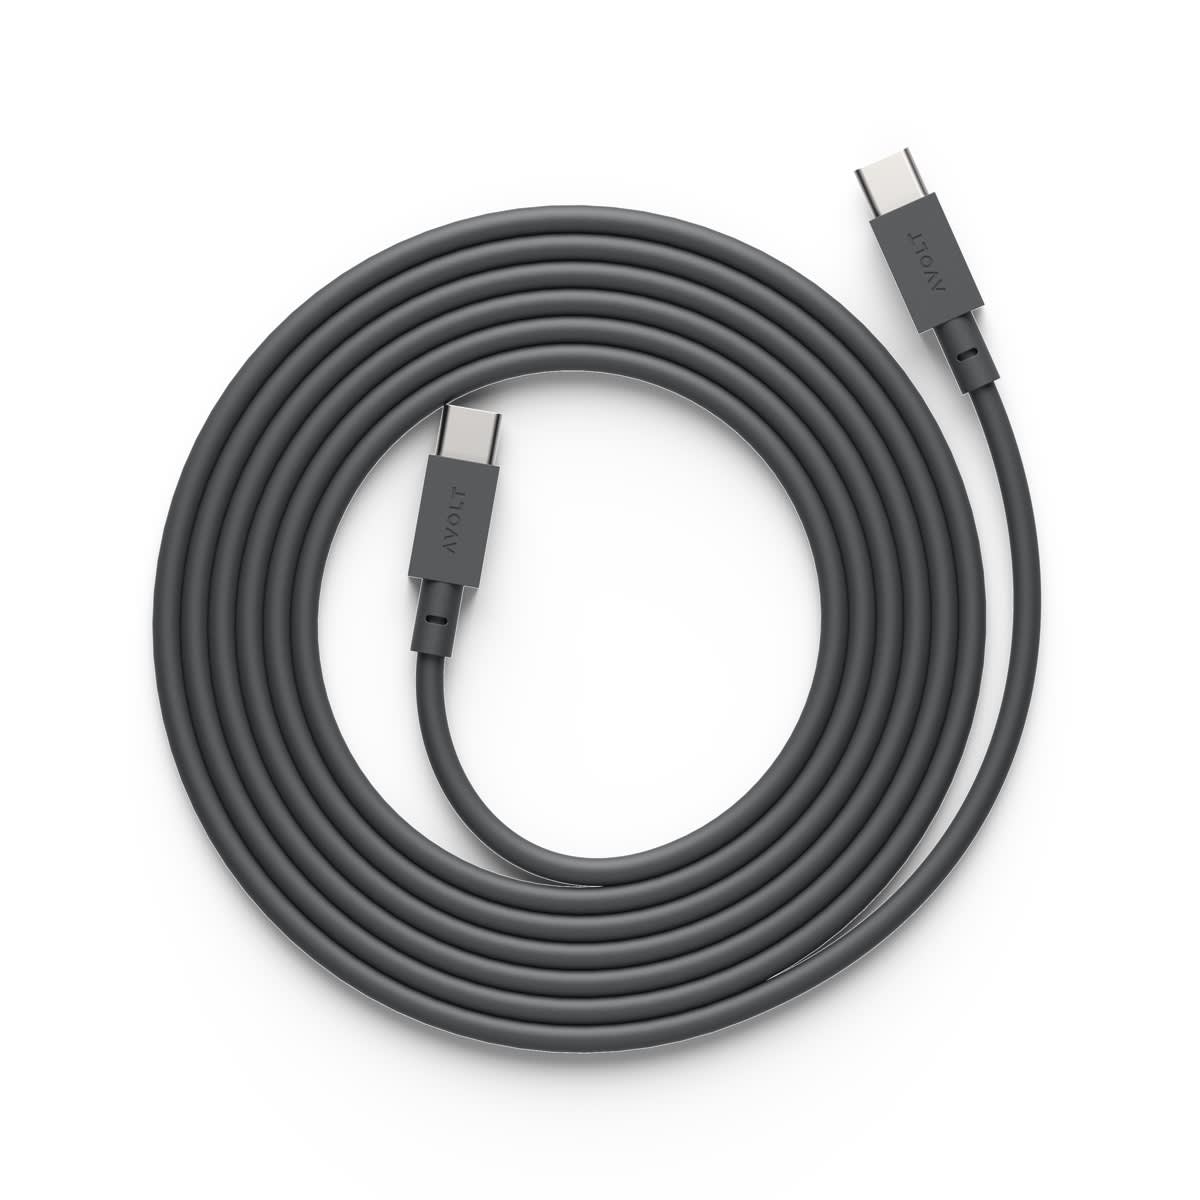 https://medias.maisonsdumonde.com/images/f_auto,q_auto/v1/mkp/M23163089_1/cable-usb-c-cable-1-usb-c-vers-usb-c-2m-stockholm-black.jpg